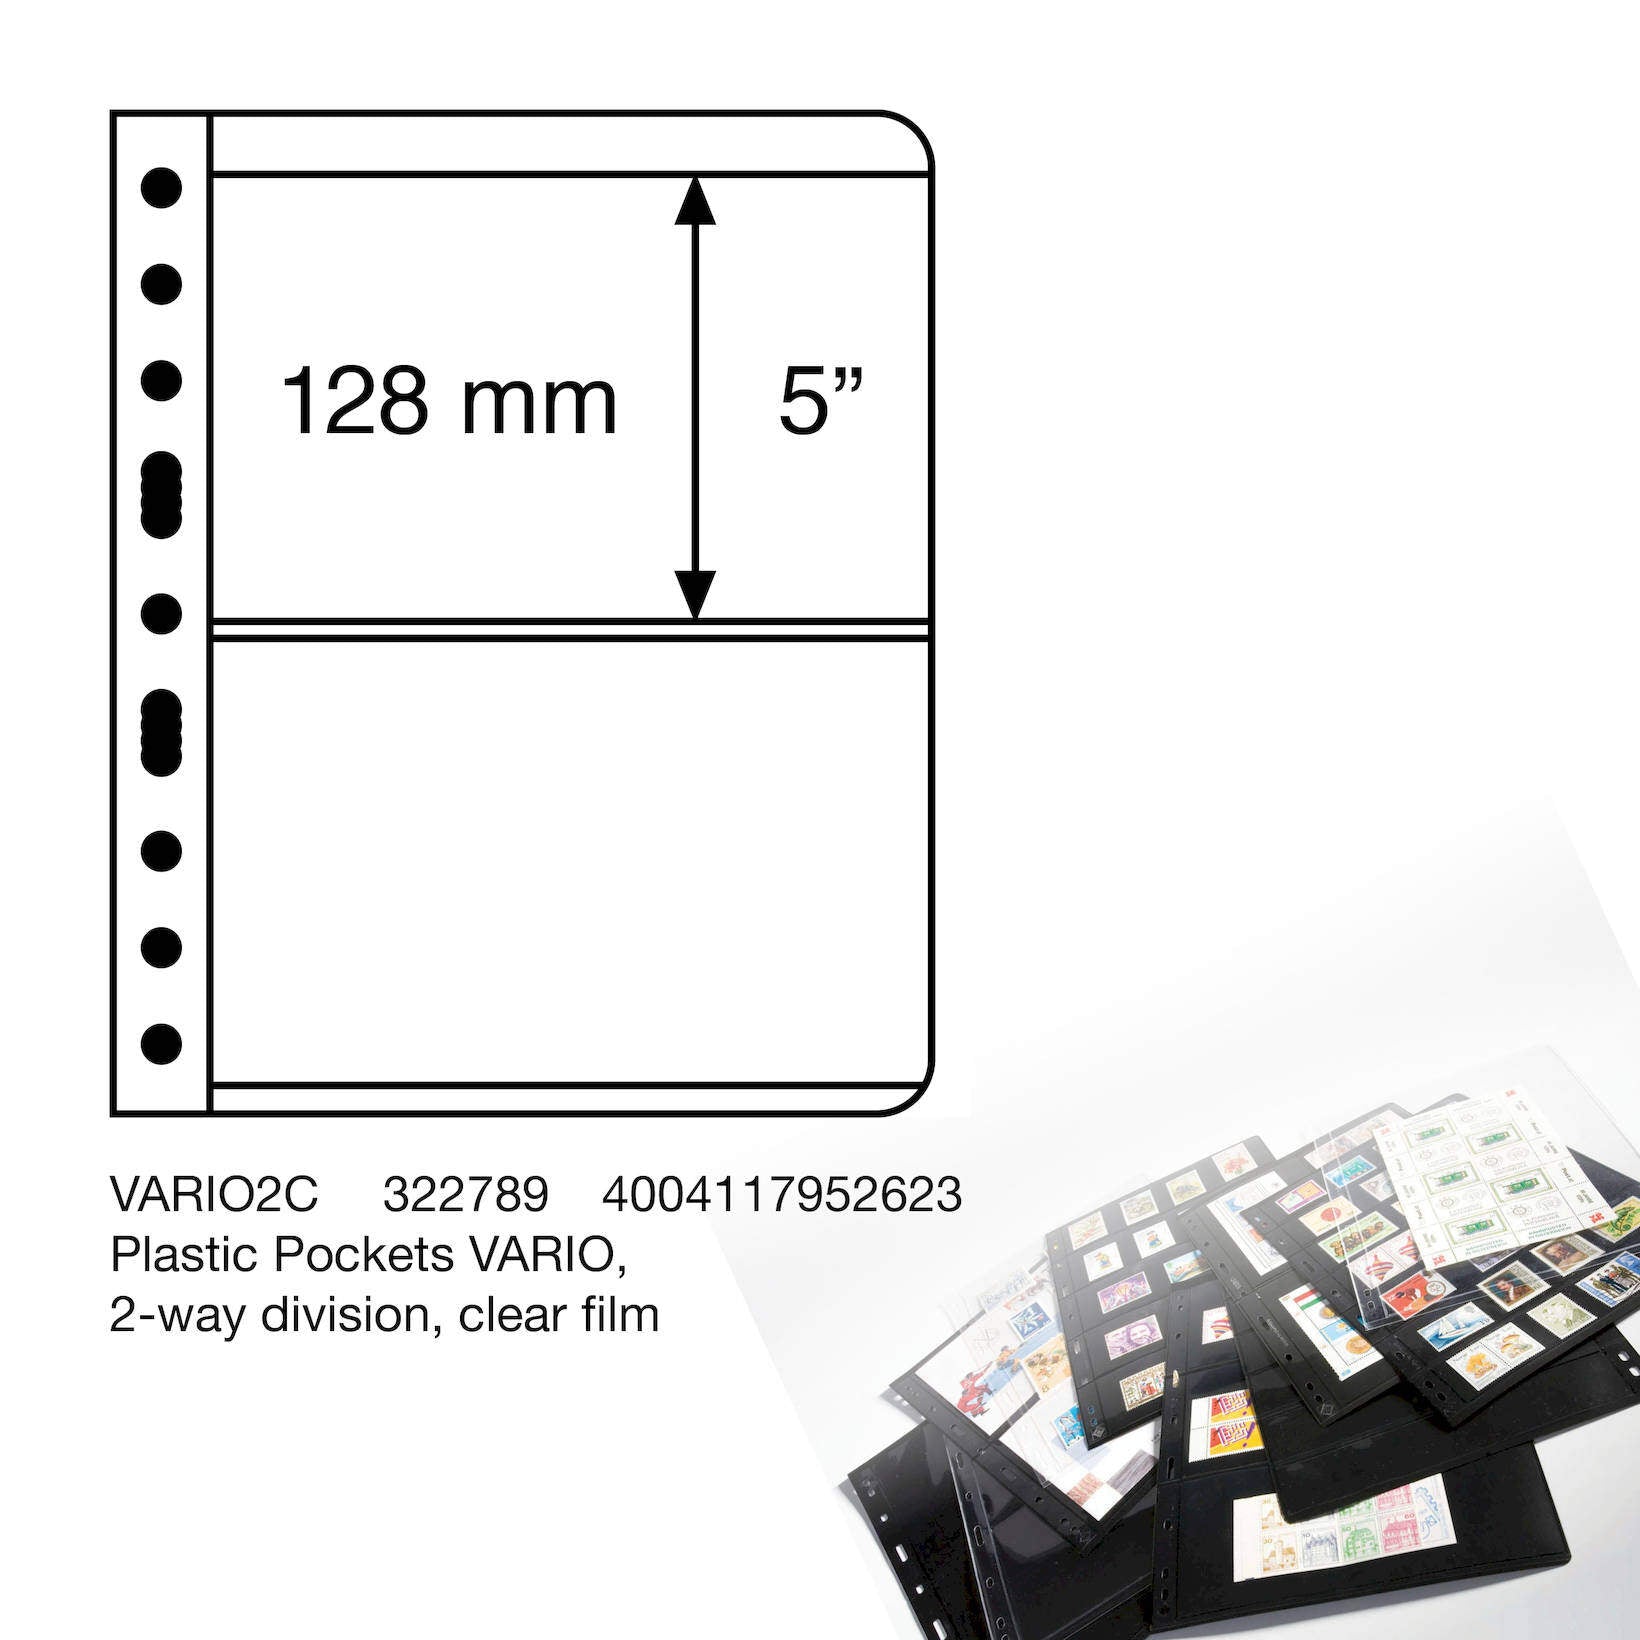 Vario 2C Plastic Pockets, 2-Way Division, Clear Film